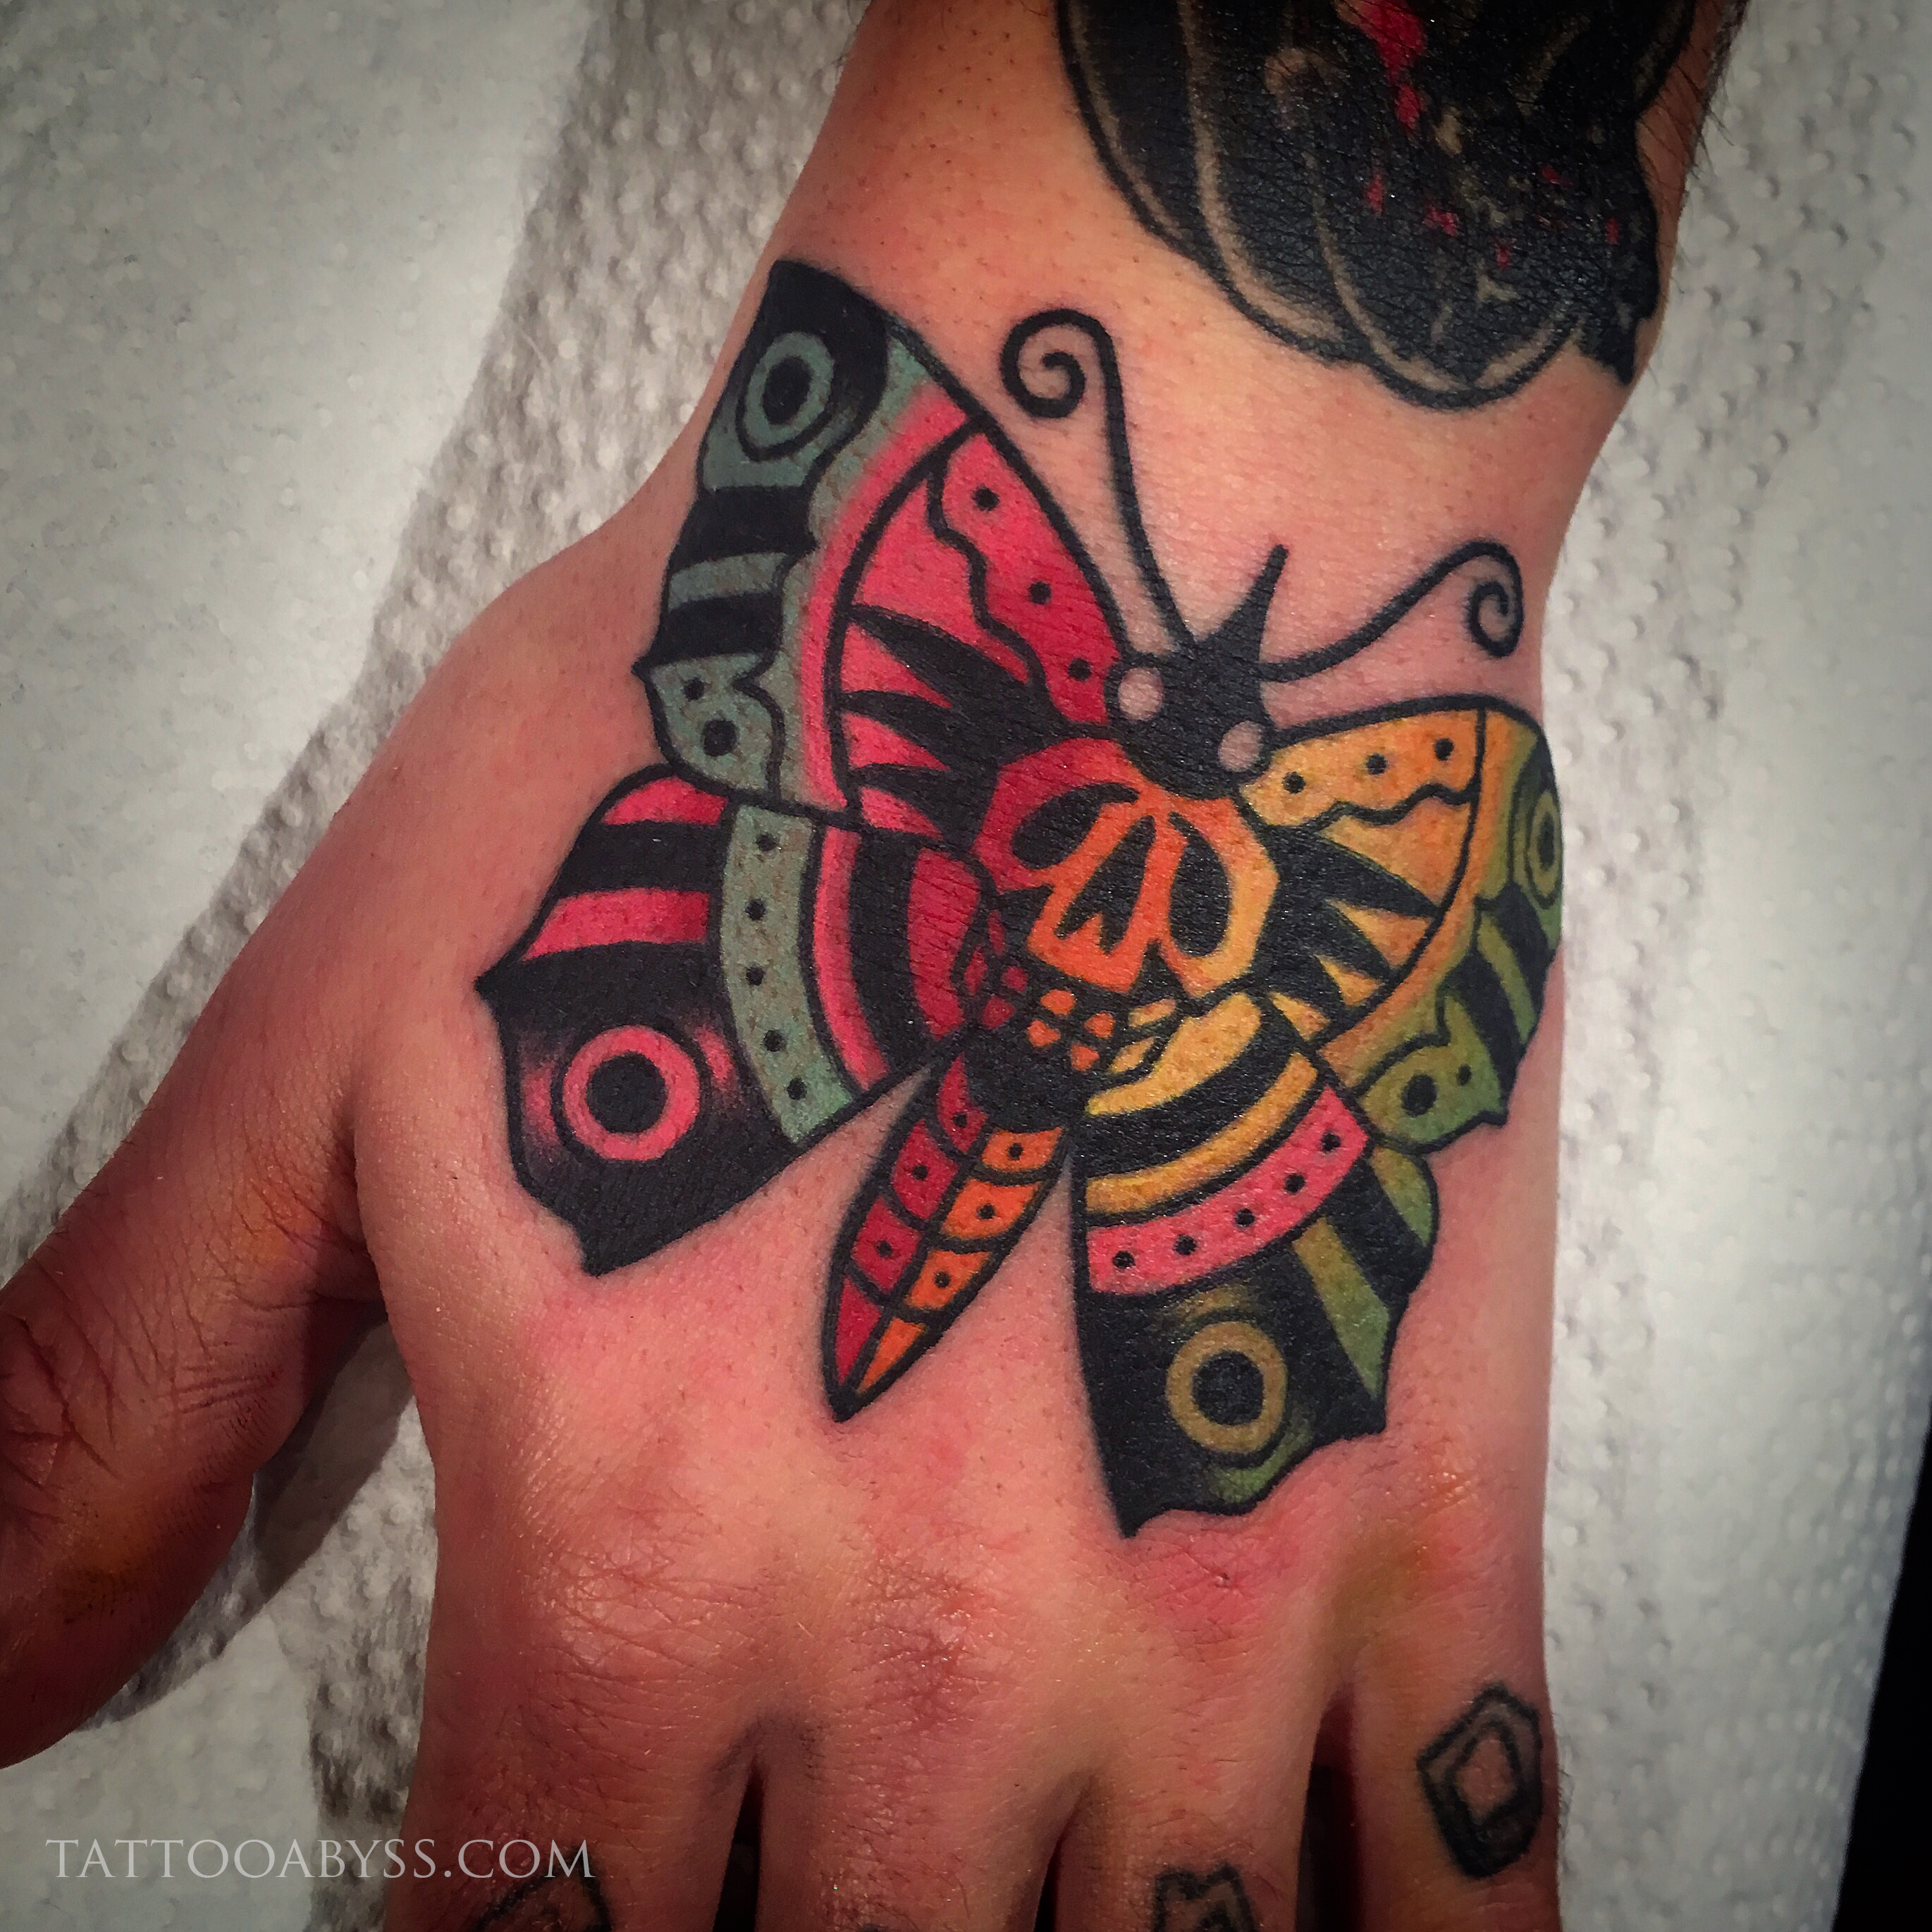 moth-hand-adz-tattoo-abyss